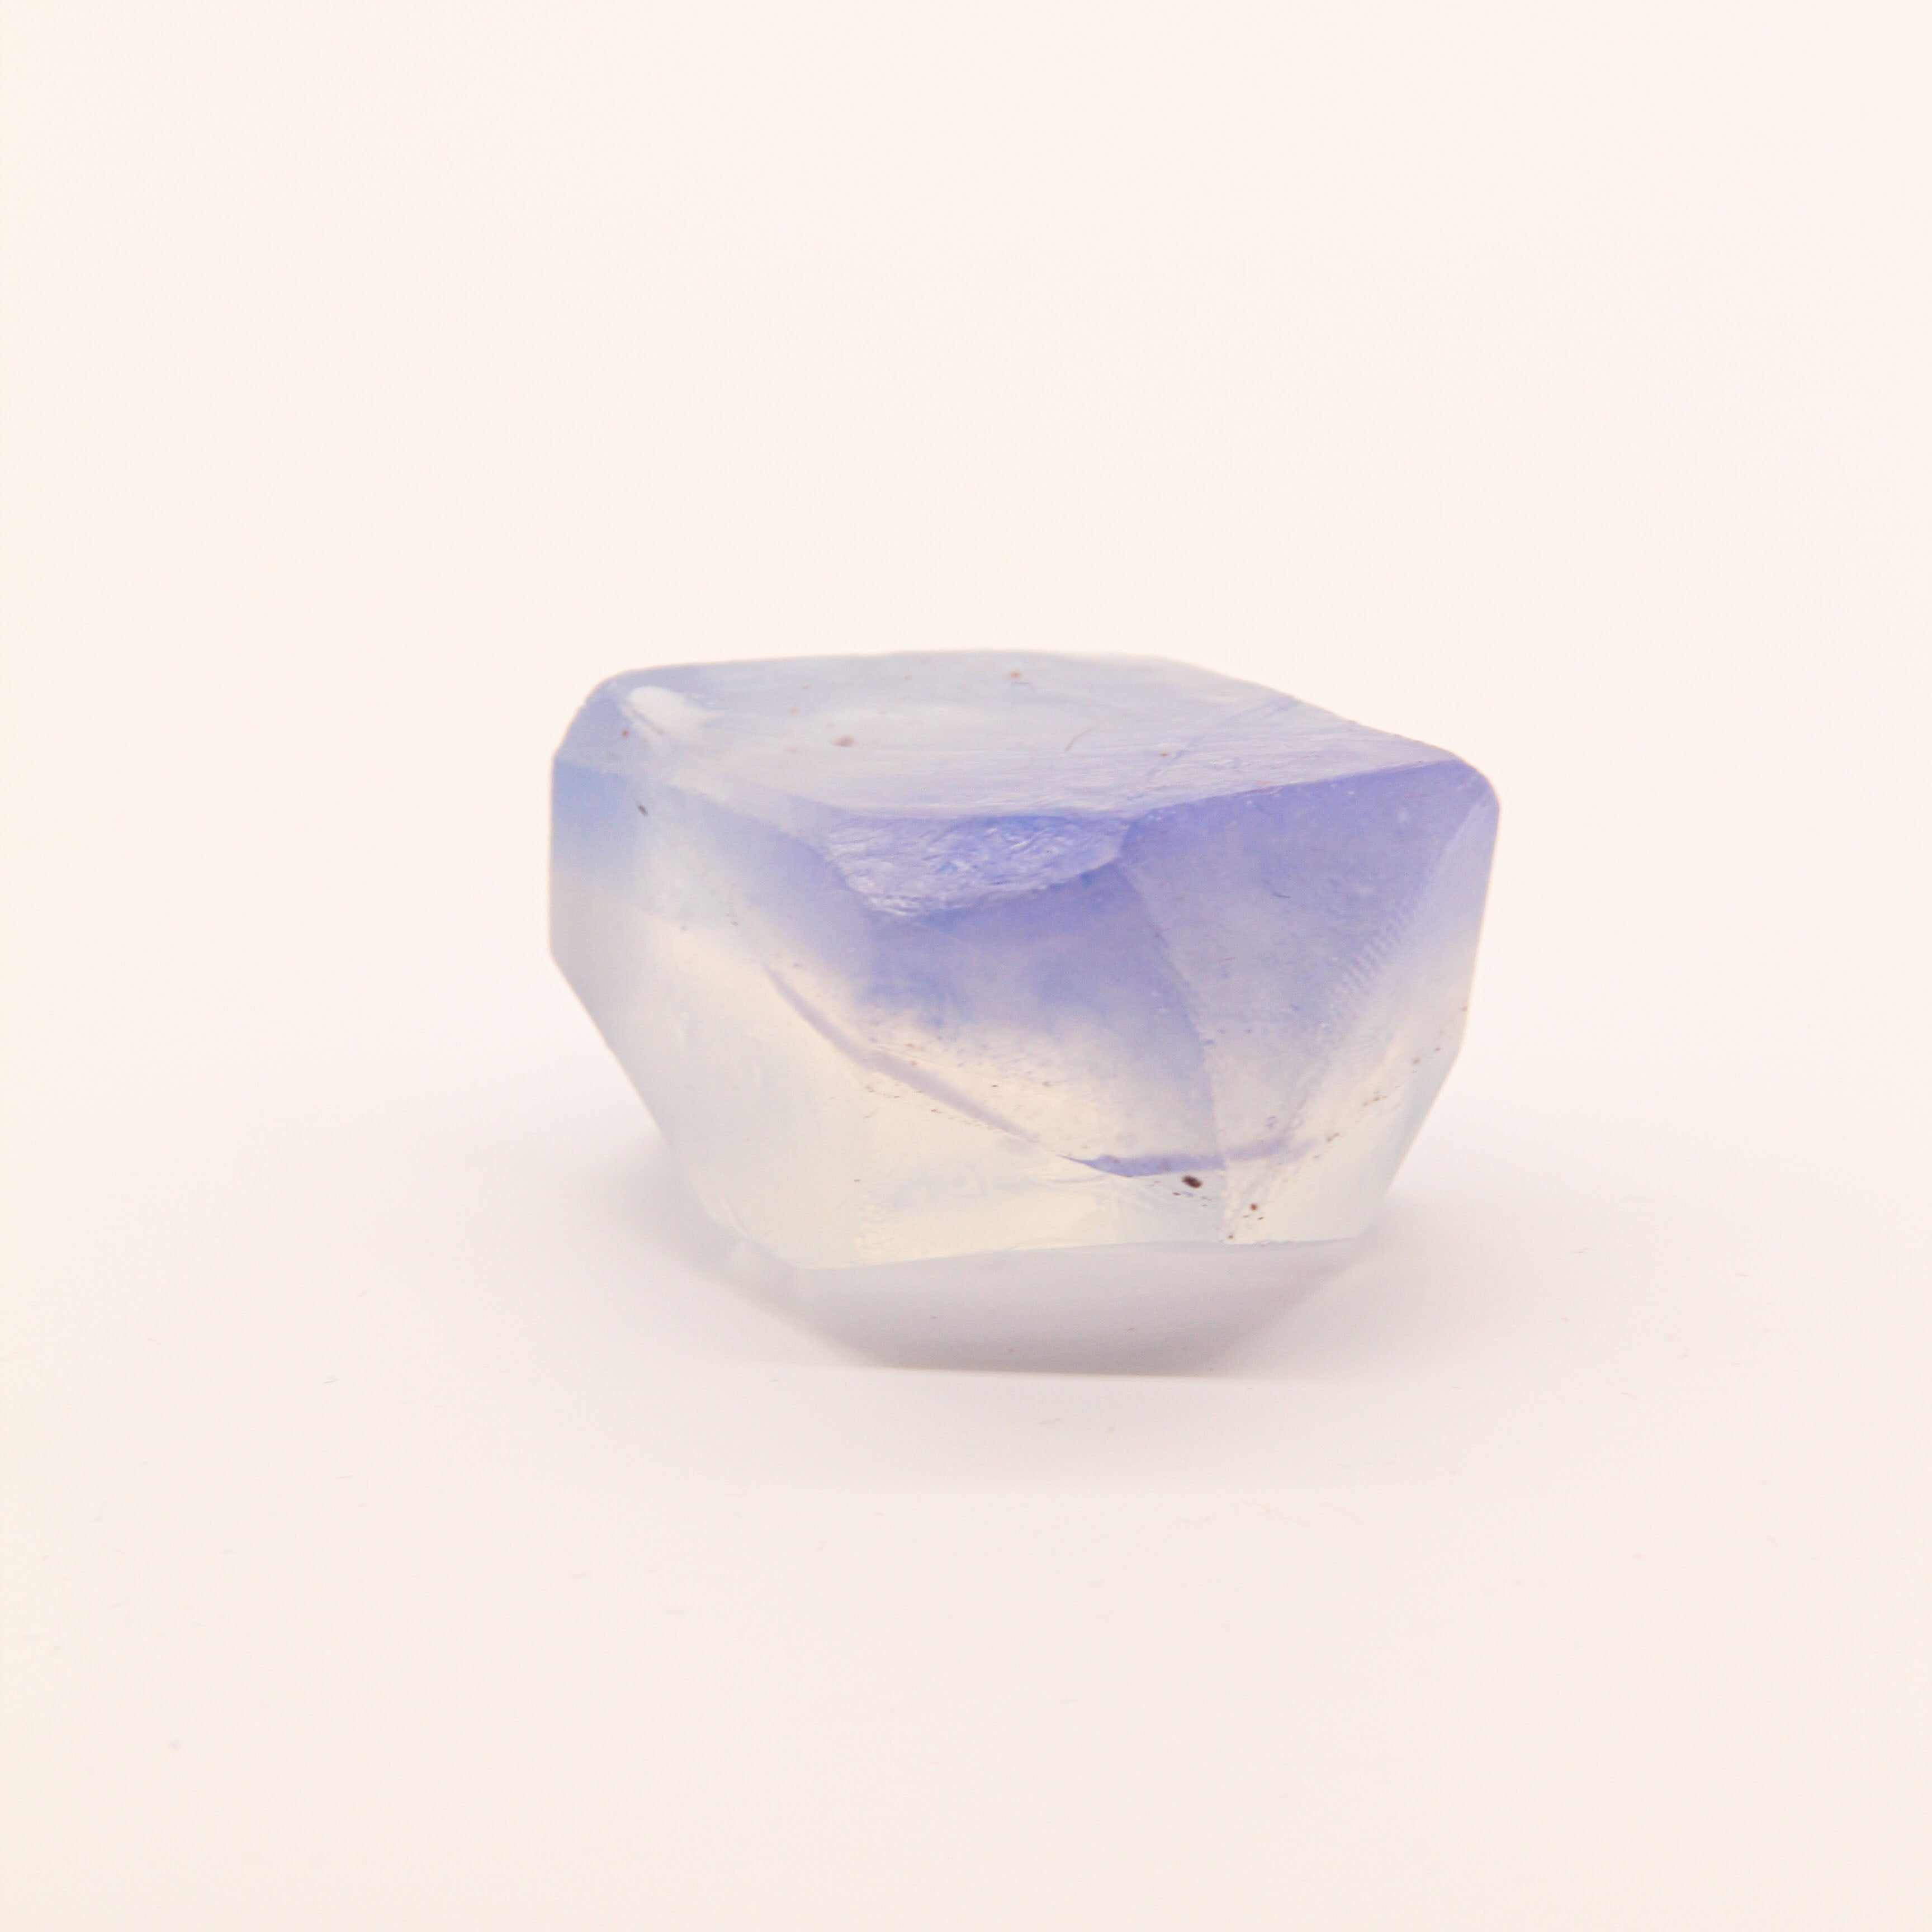 Blue Zircon Birthstone Handmade Soap (December)